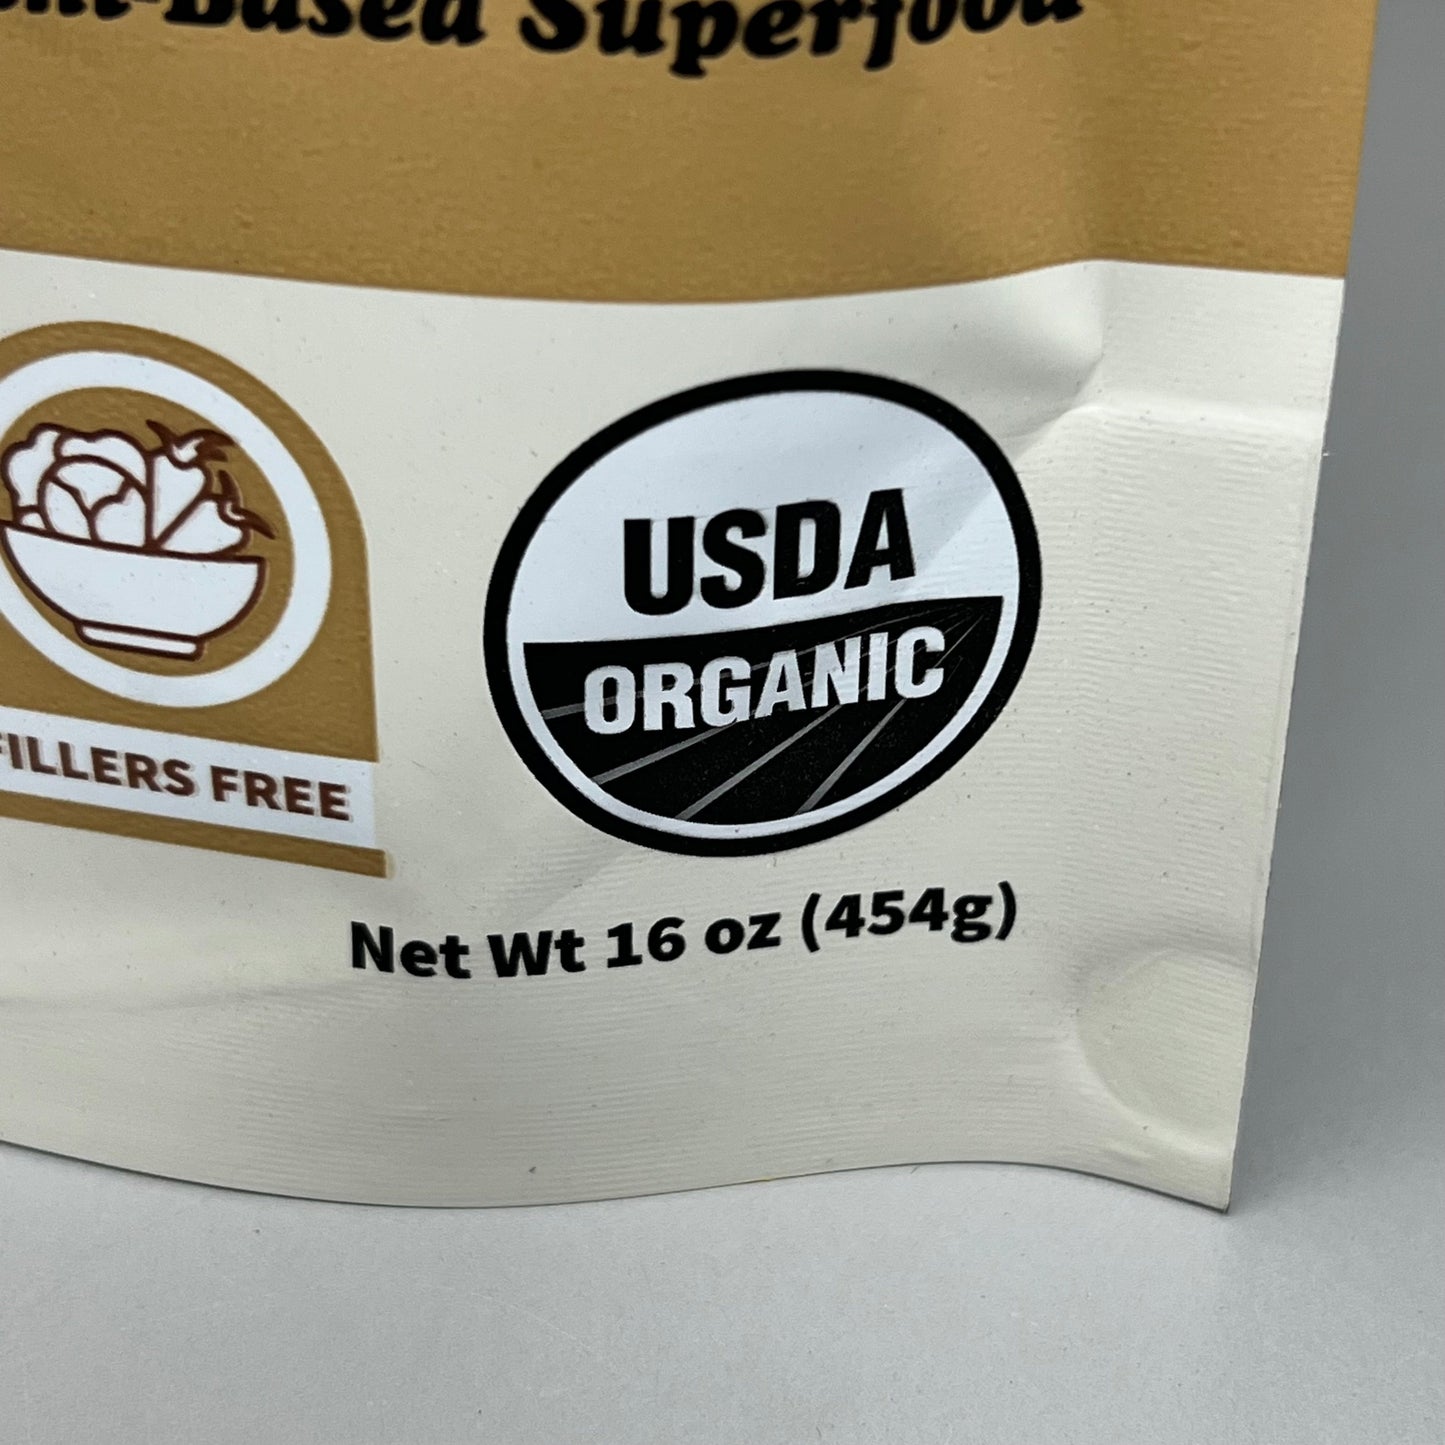 NUTRI-HUT Organic Maca Root Powder 16 oz Vegan, Non-GMO, Gluten Free BB 07/25